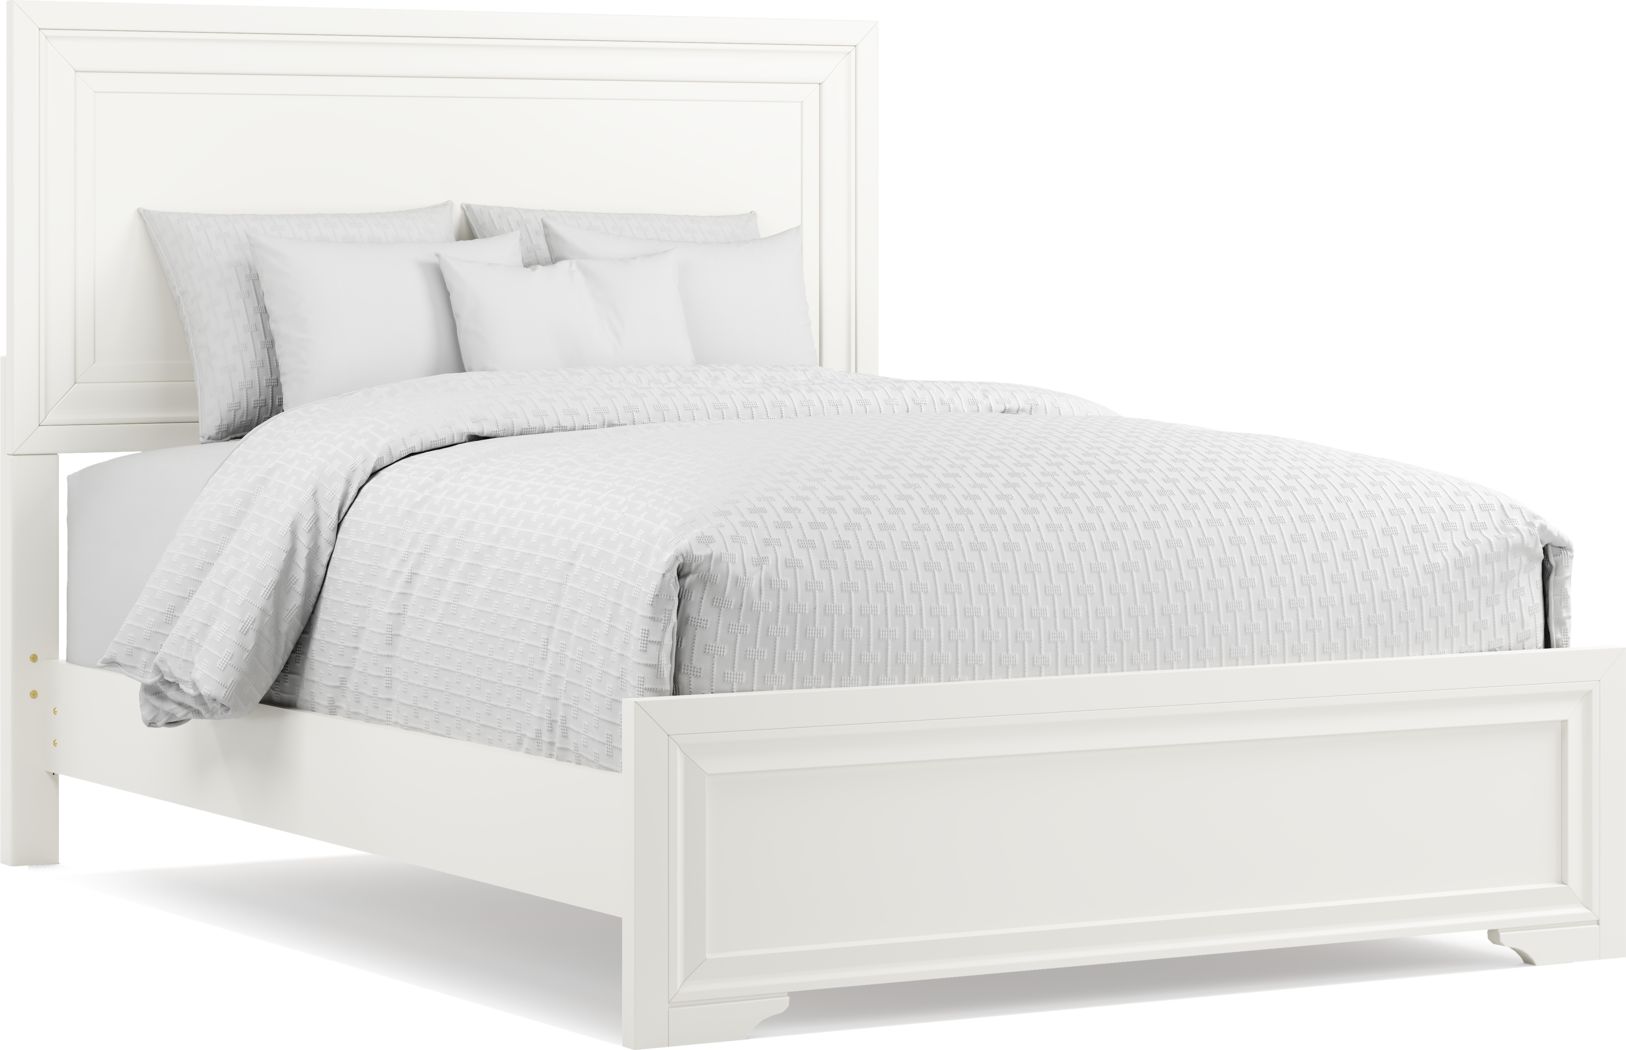 belcourt white bedroom furniture